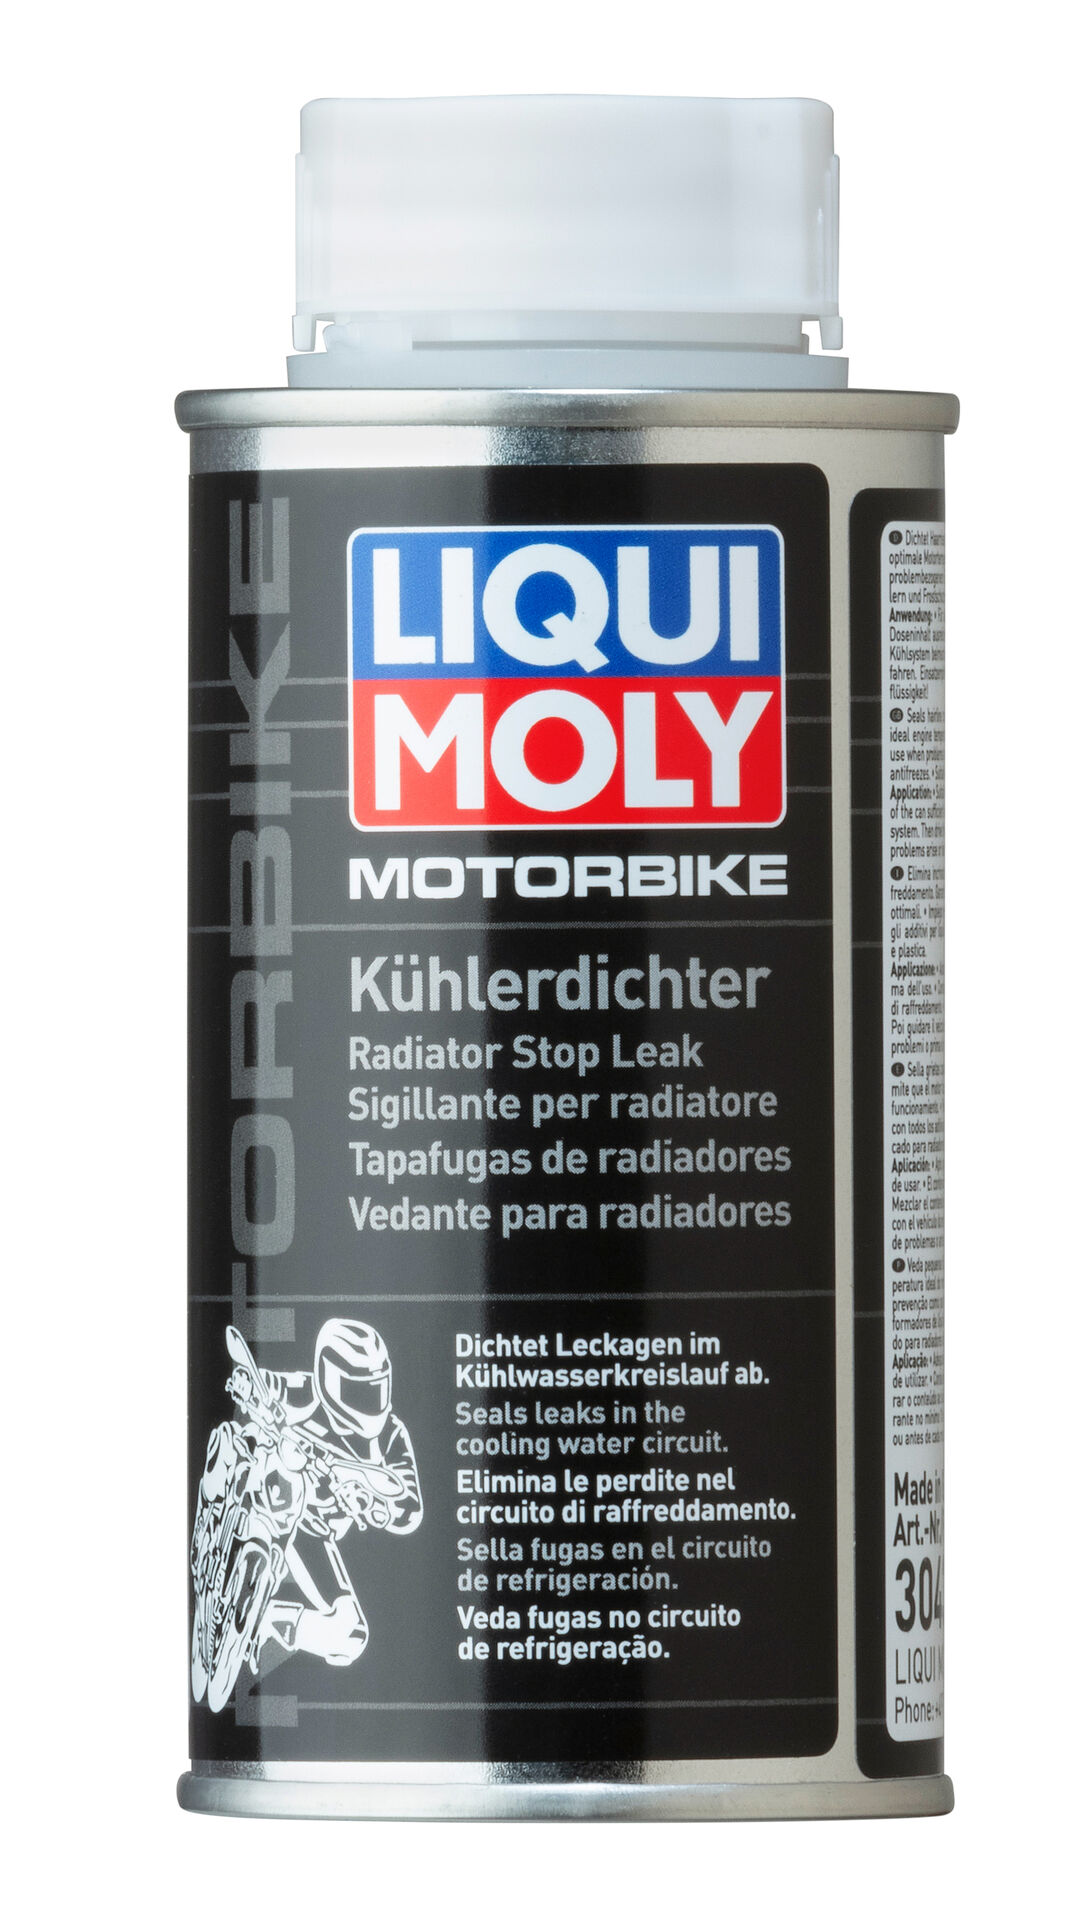 LIQUI MOLY Motorbike Kühler-Dichter Radiator Leak Stop Dose 125 ml